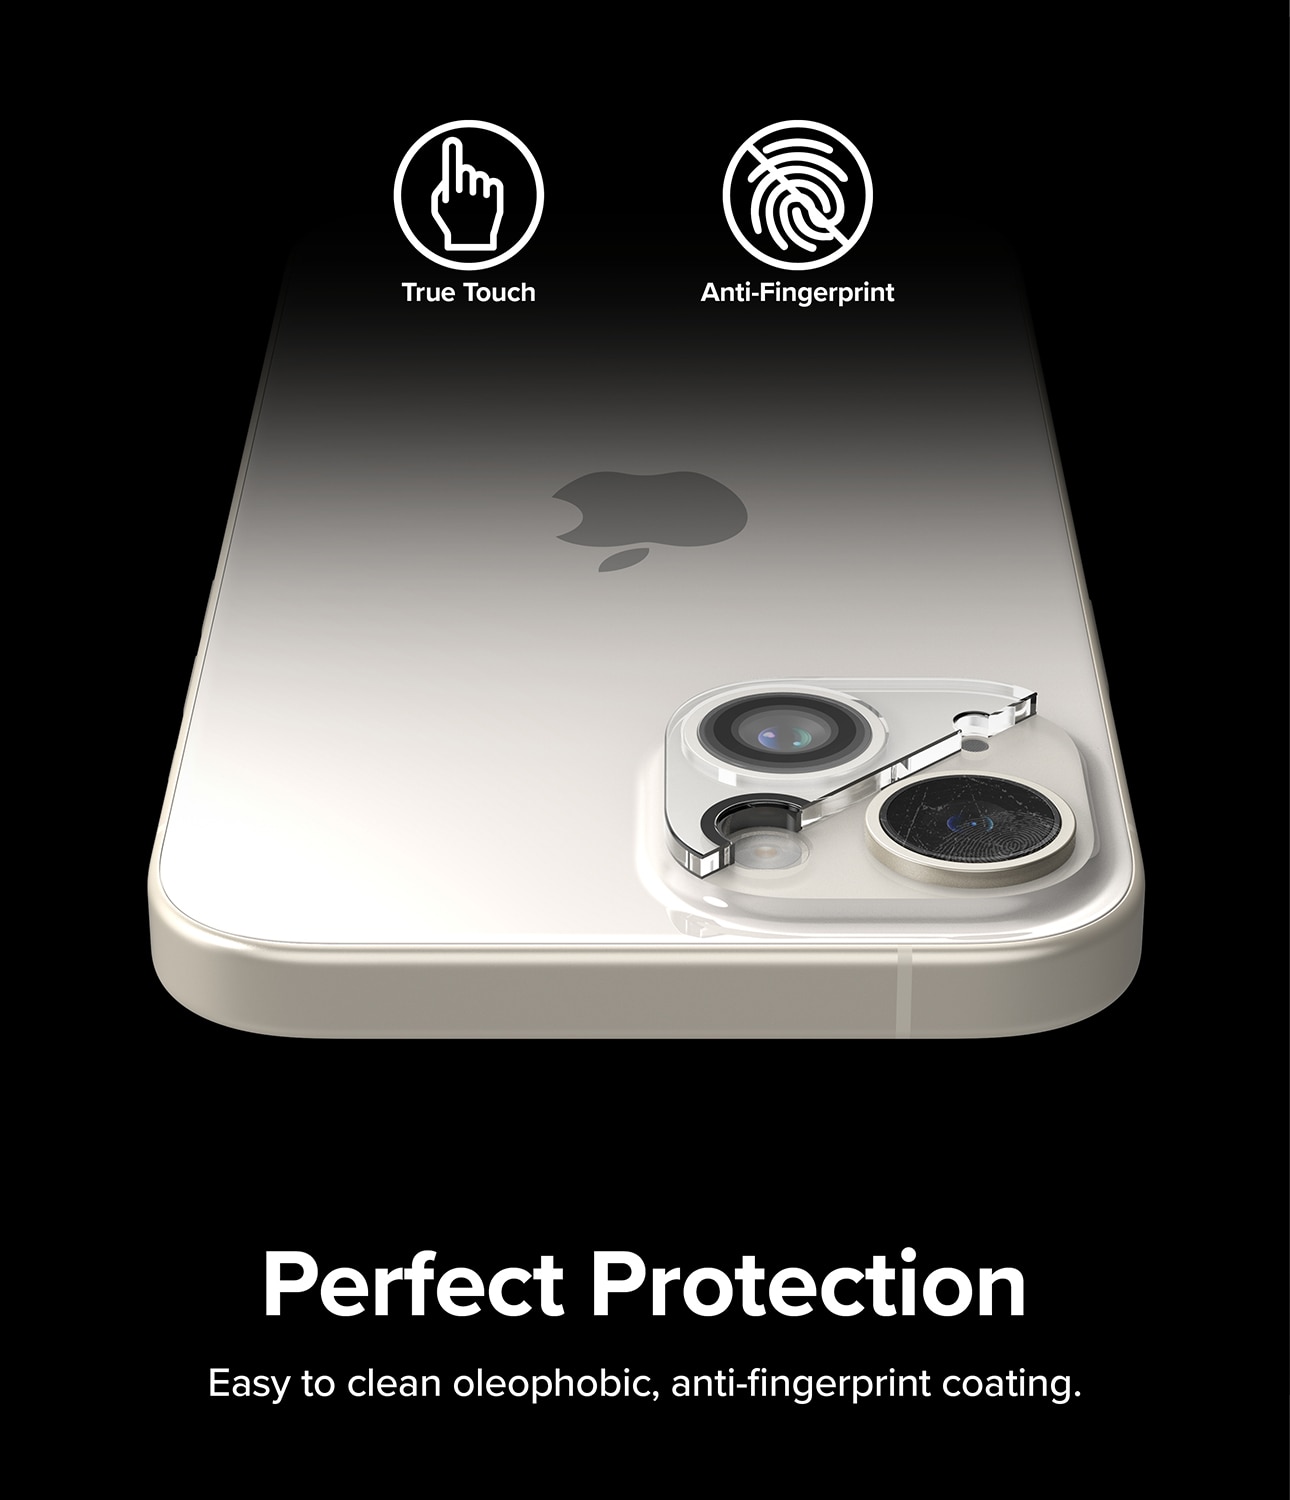 iPhone 15 Plus Kameraskydd i glas (2-pack)